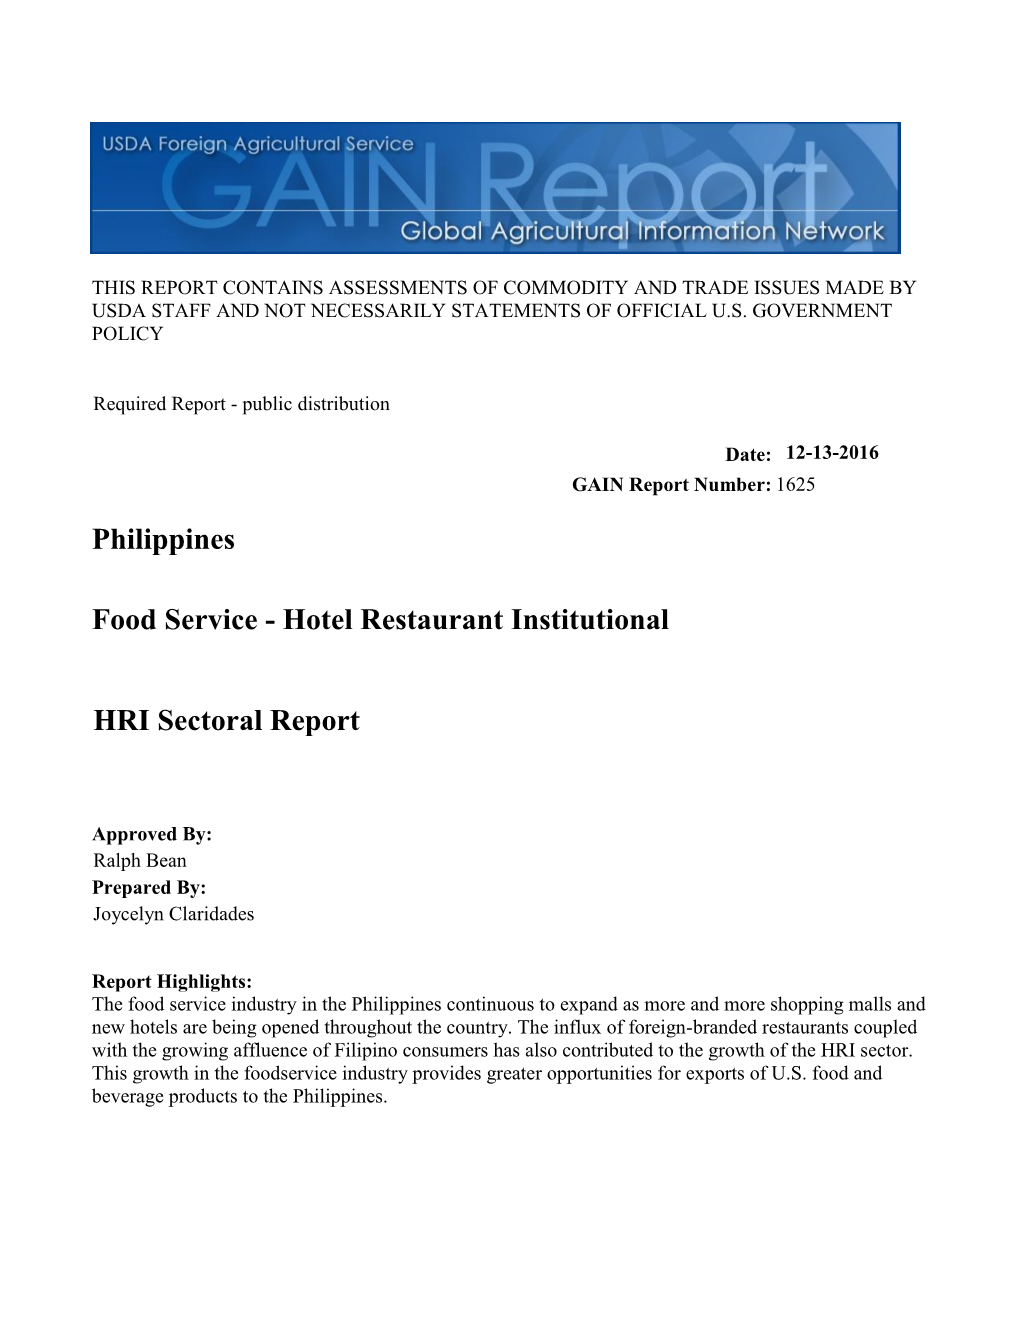 Philippines: Food Service